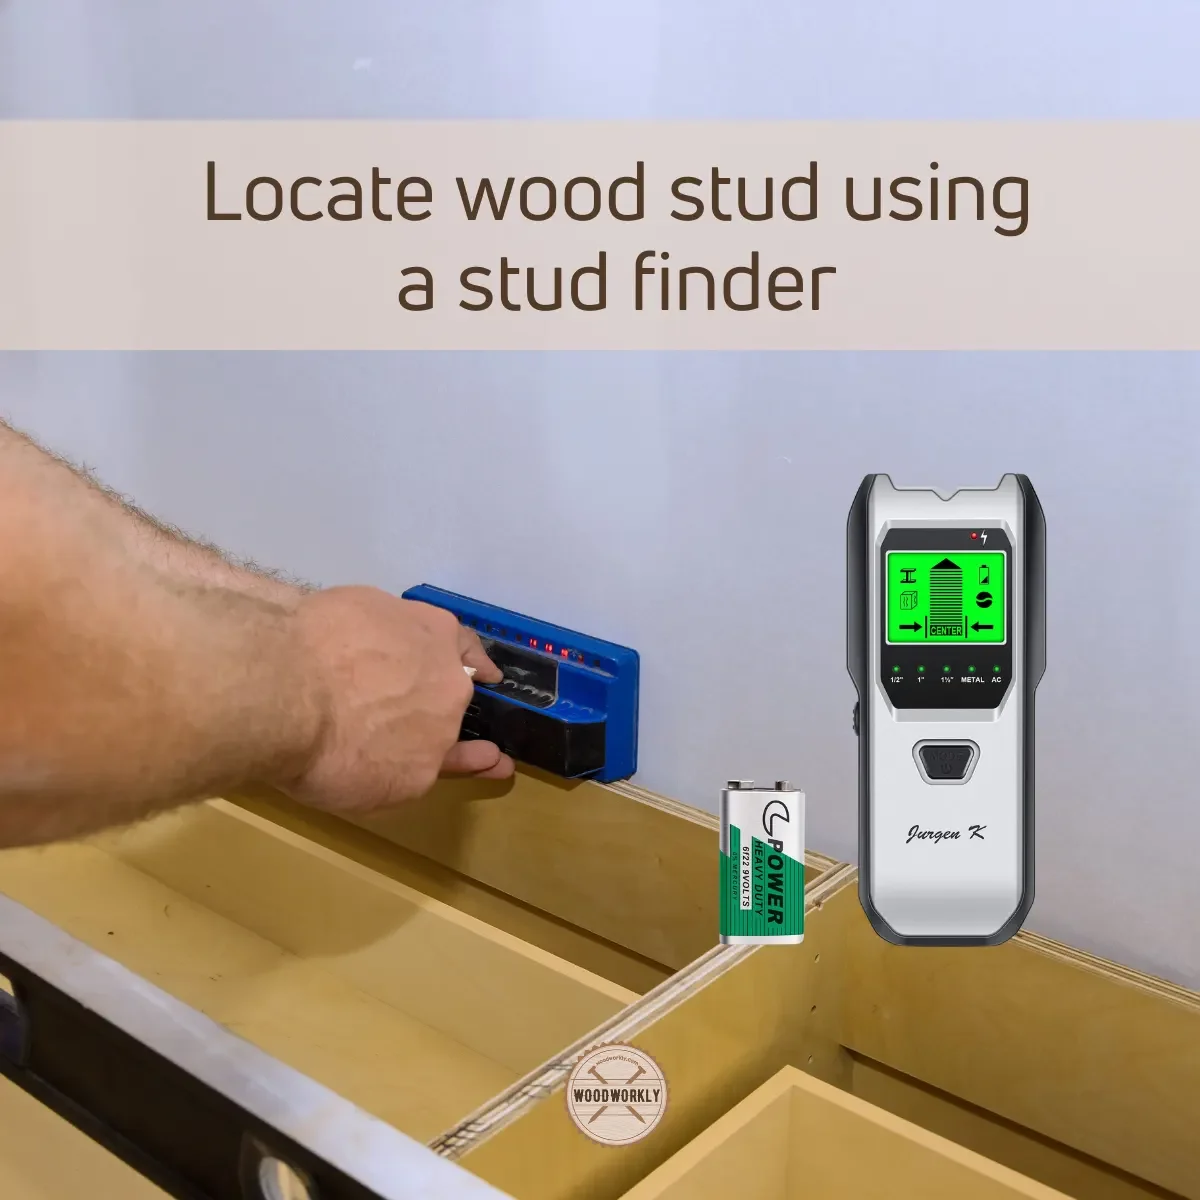 Locate wood stud using a stud finder